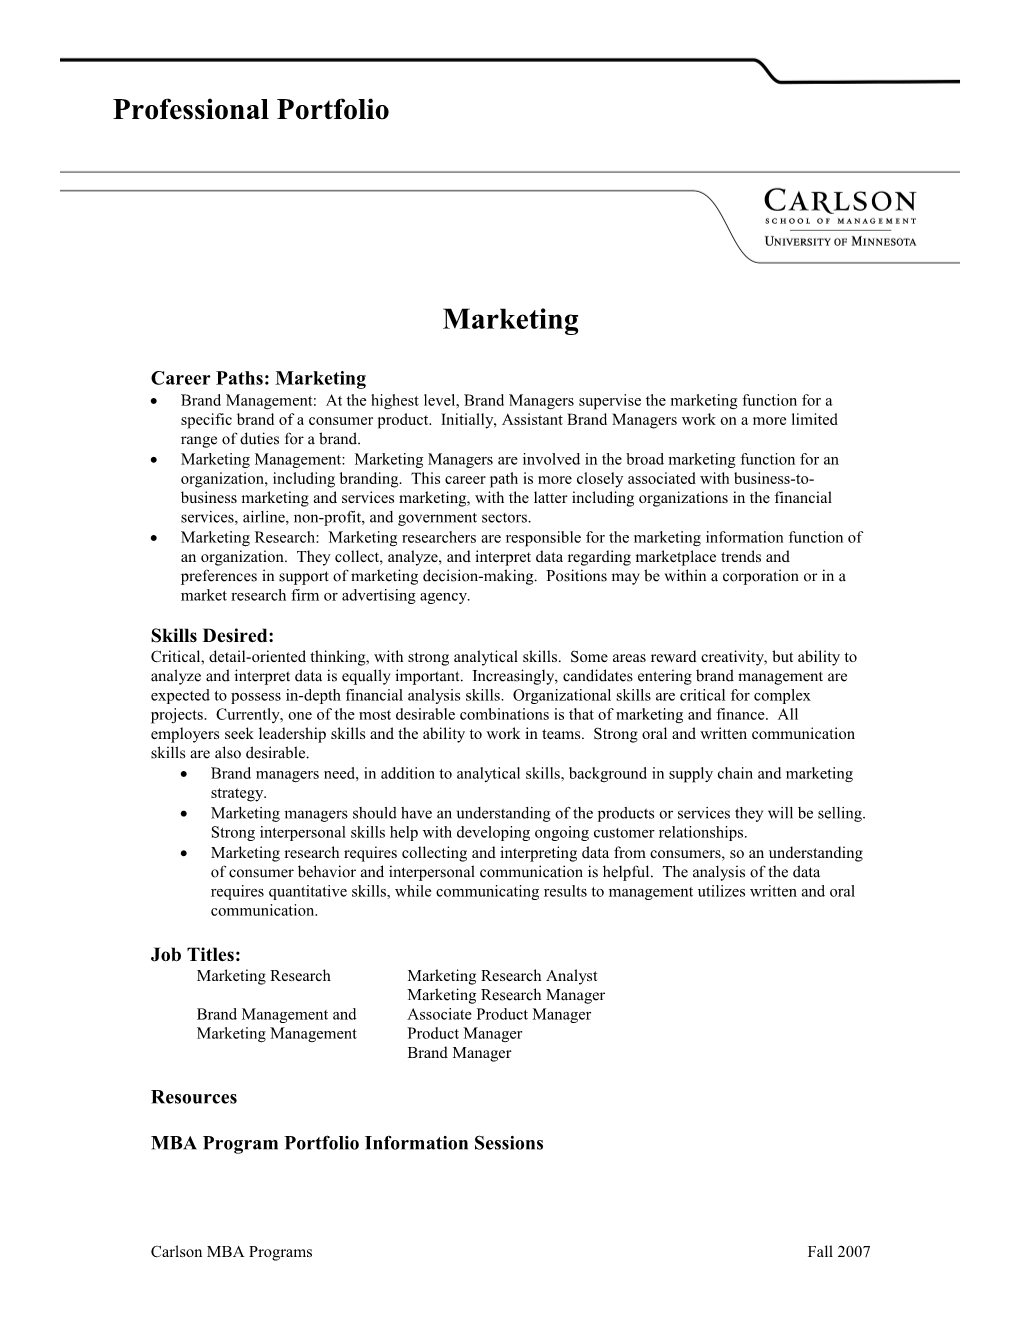 Marketing Portfolio (Word 1MB)